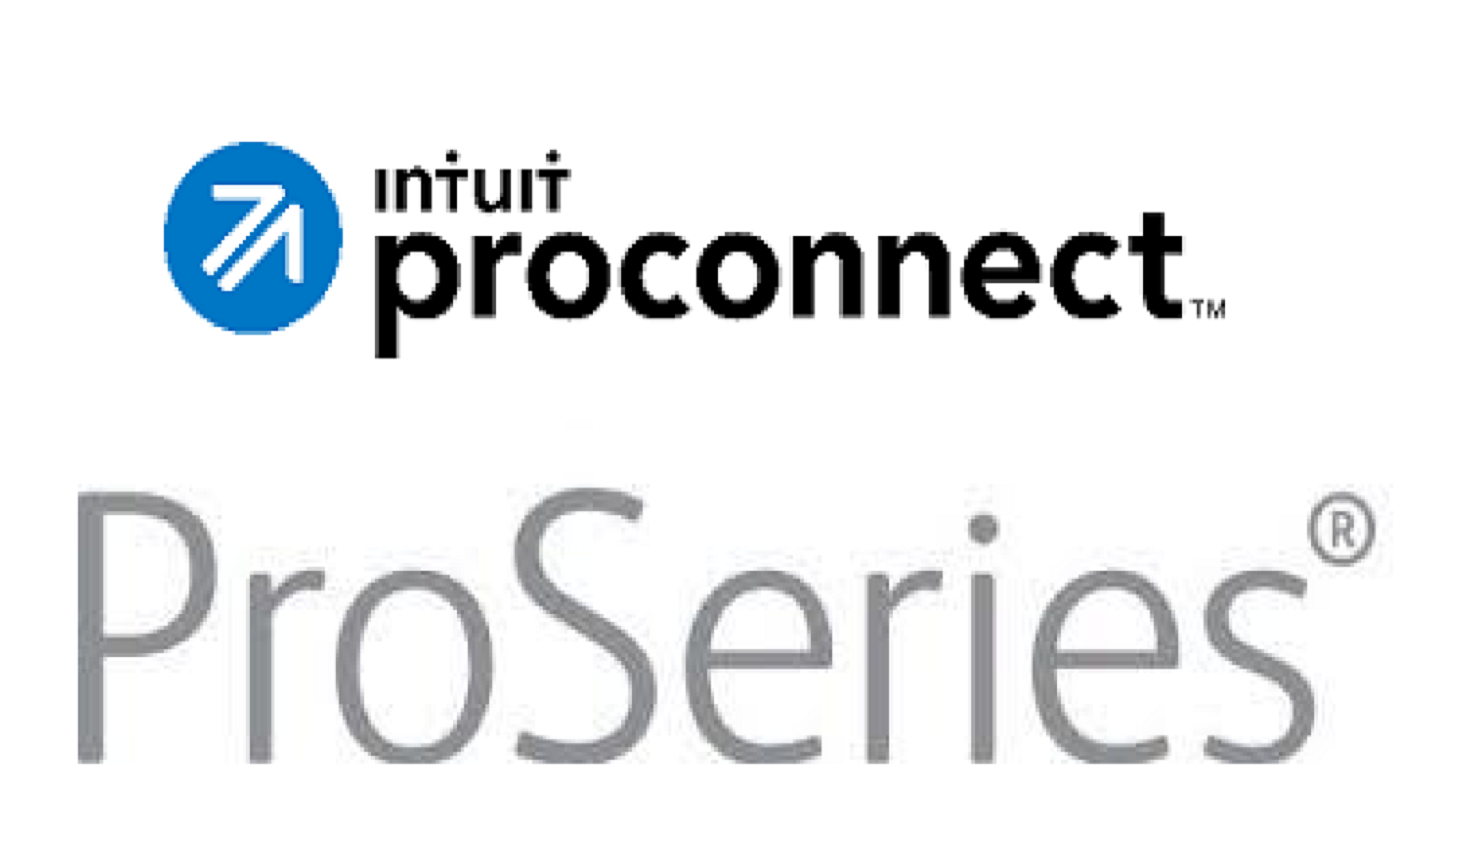 intuit-proseries logo